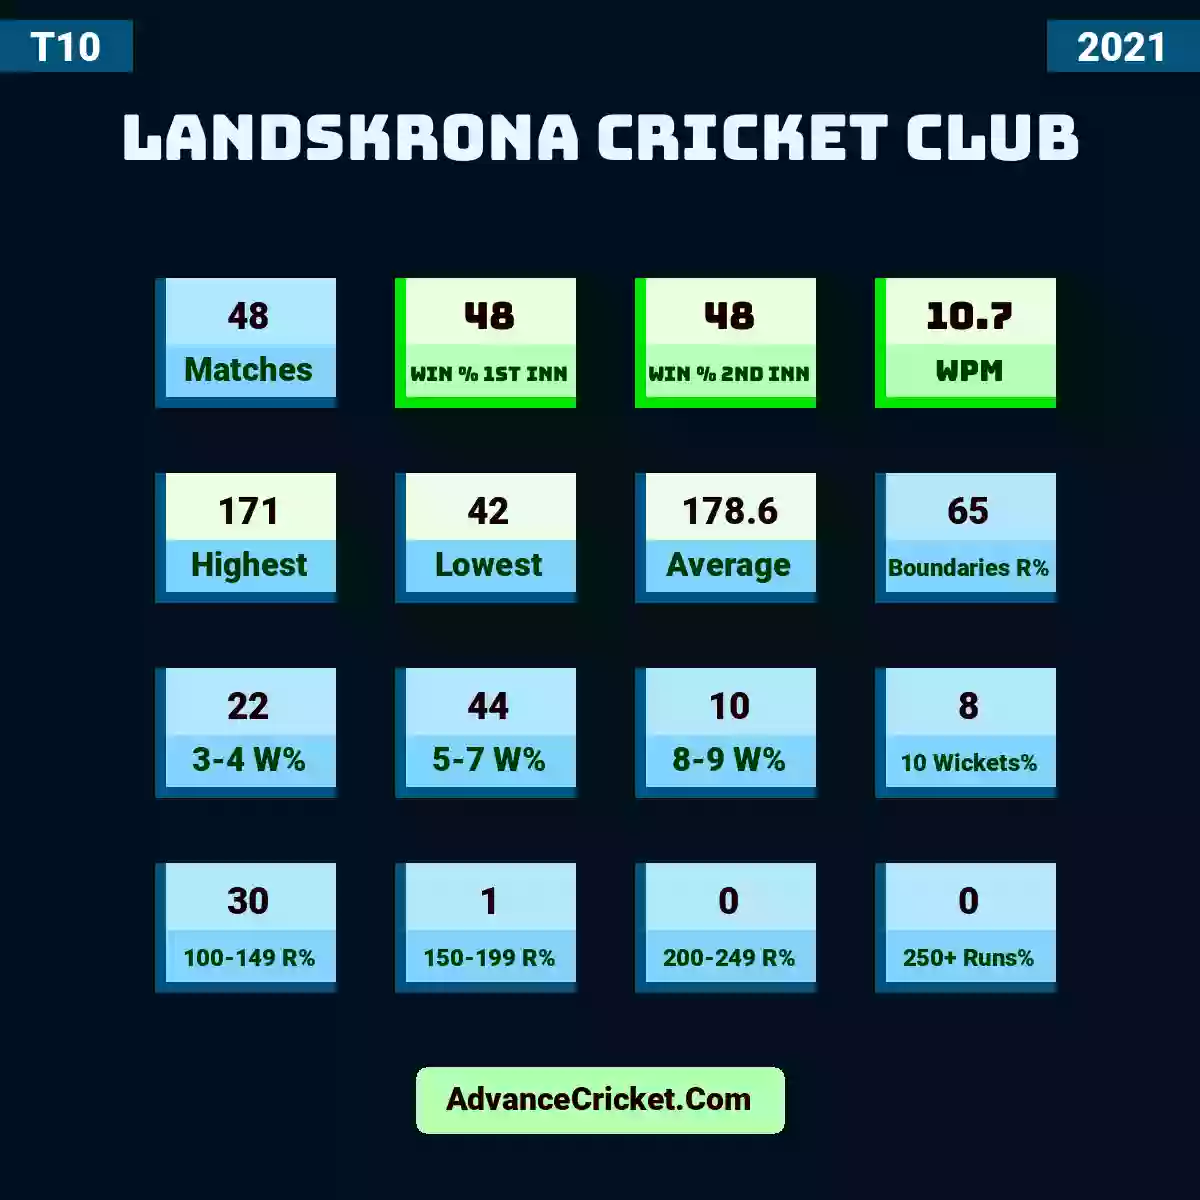 Image showing Landskrona Cricket Club with Matches: 48, Win % 1st Inn: 48, Win % 2nd Inn: 48, WPM: 10.7, Highest: 171, Lowest: 42, Average: 178.6, Boundaries R%: 65, 3-4 W%: 22, 5-7 W%: 44, 8-9 W%: 10, 10 Wickets%: 8, 100-149 R%: 30, 150-199 R%: 1, 200-249 R%: 0, 250+ Runs%: 0.